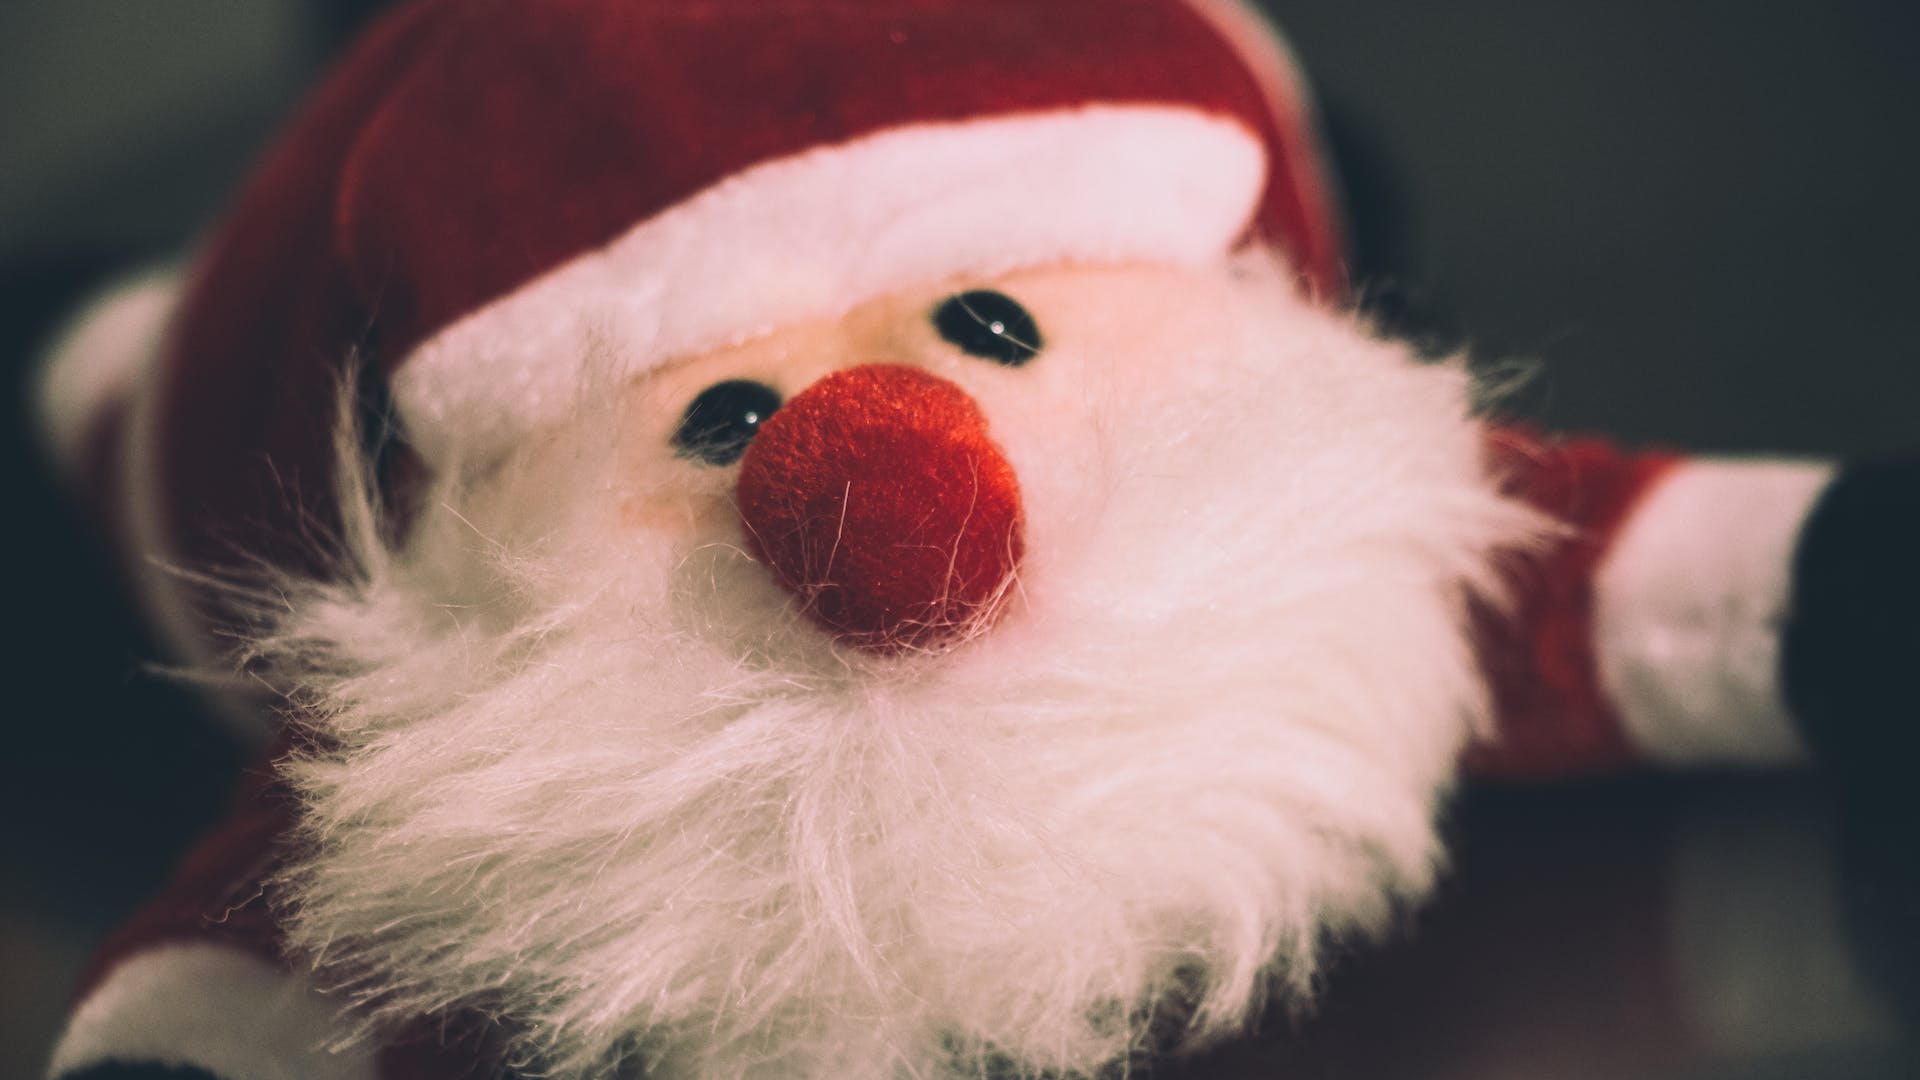 A Santa Claus toy | Source: Pexels